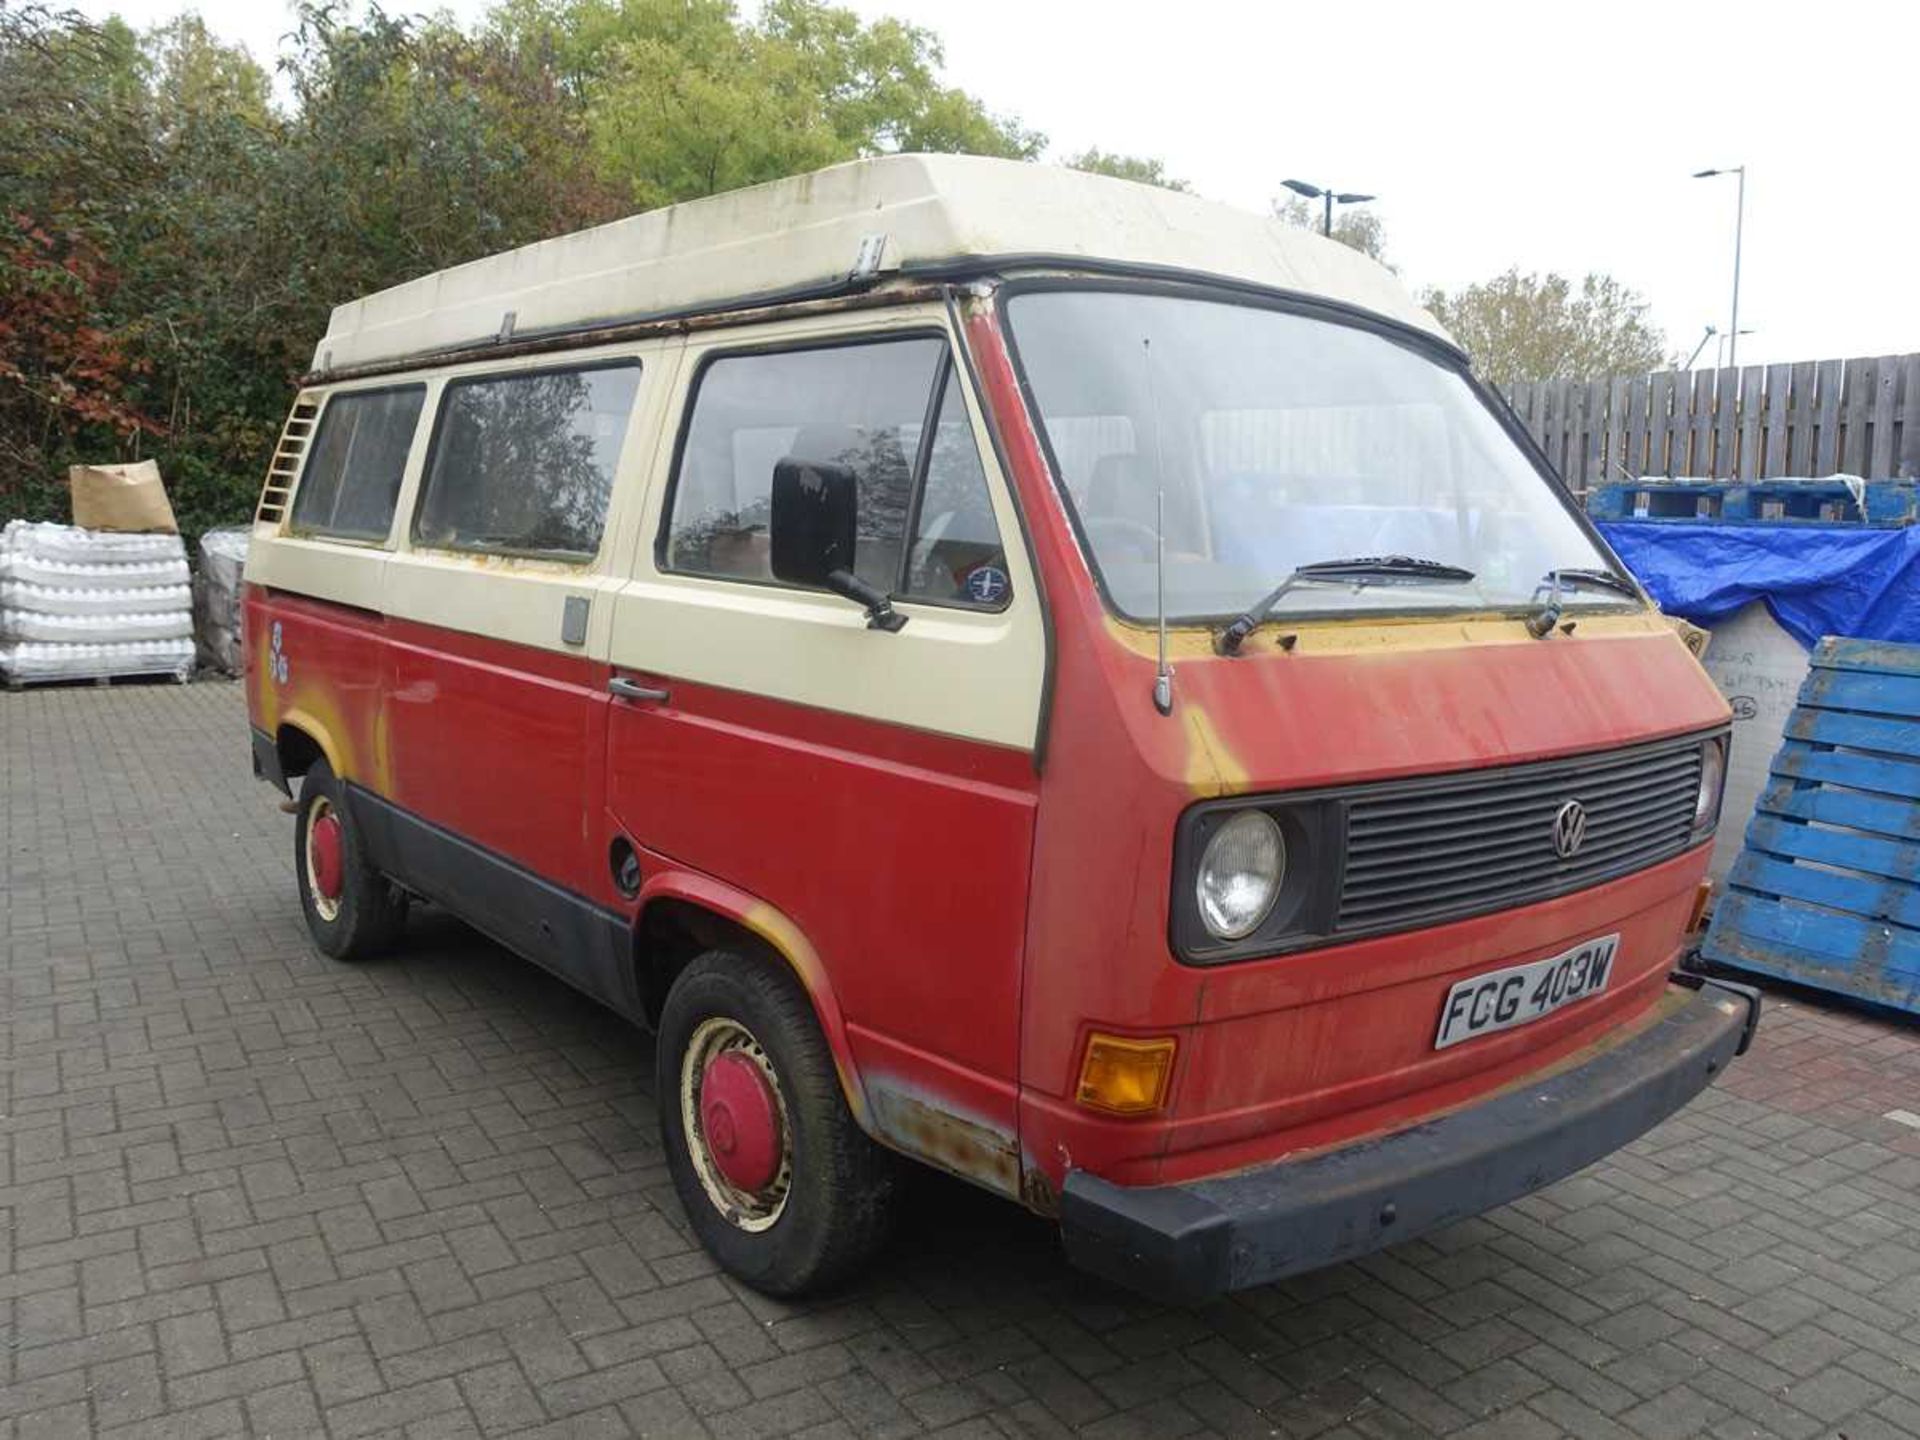 (FCG 403W) Volkswagen T25 Camper Van, Devon Moonraker in red and cream, with original gas fridge - Image 3 of 16